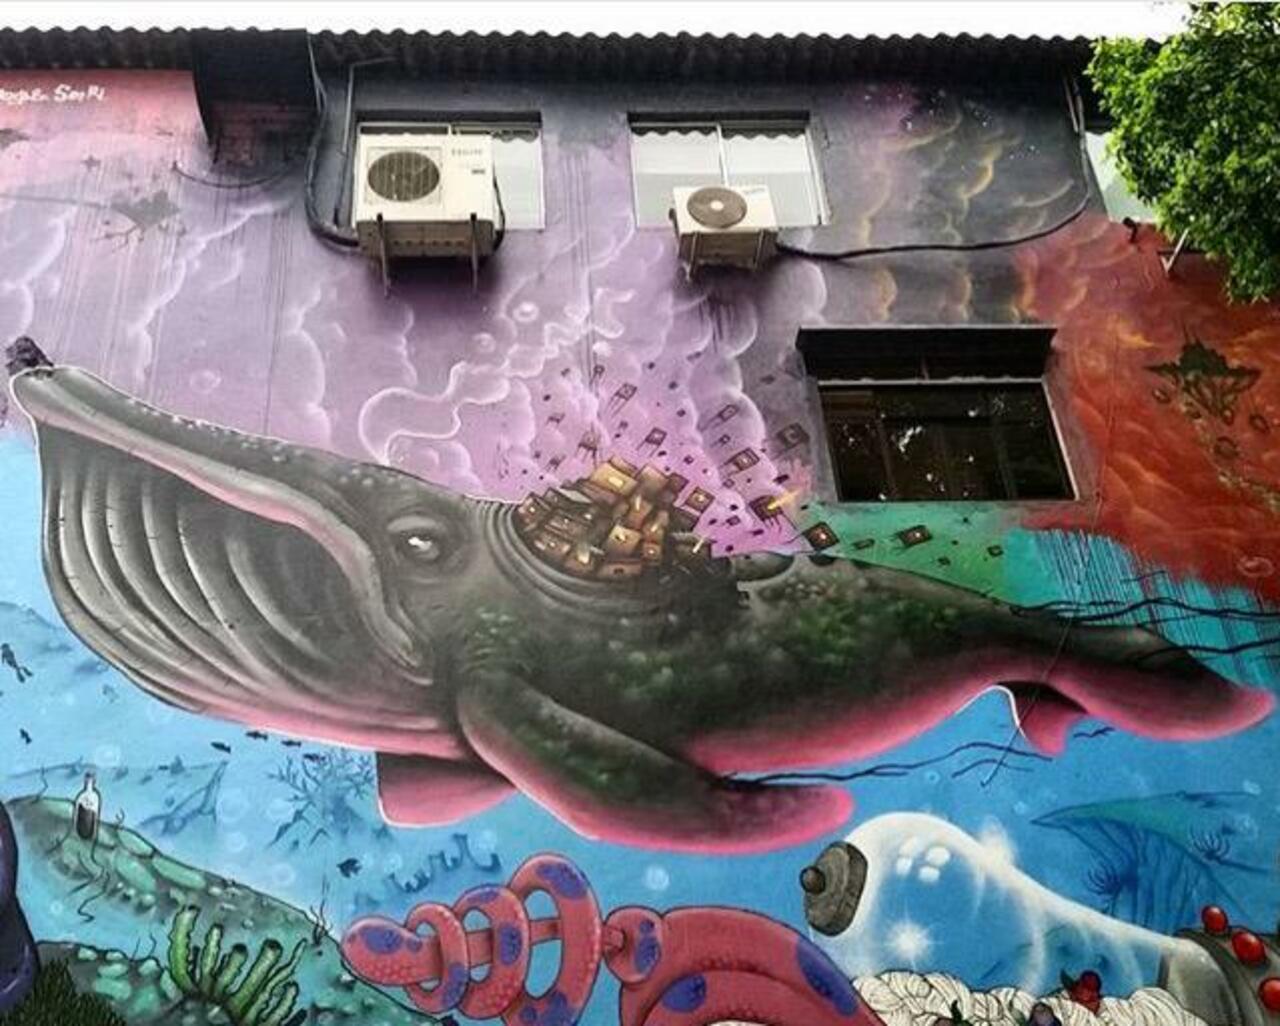 Street Art by joks_johnes Pinheiros, São Paulo 

#art #mural #graffiti #streetart http://t.co/F5UxPxSNYI